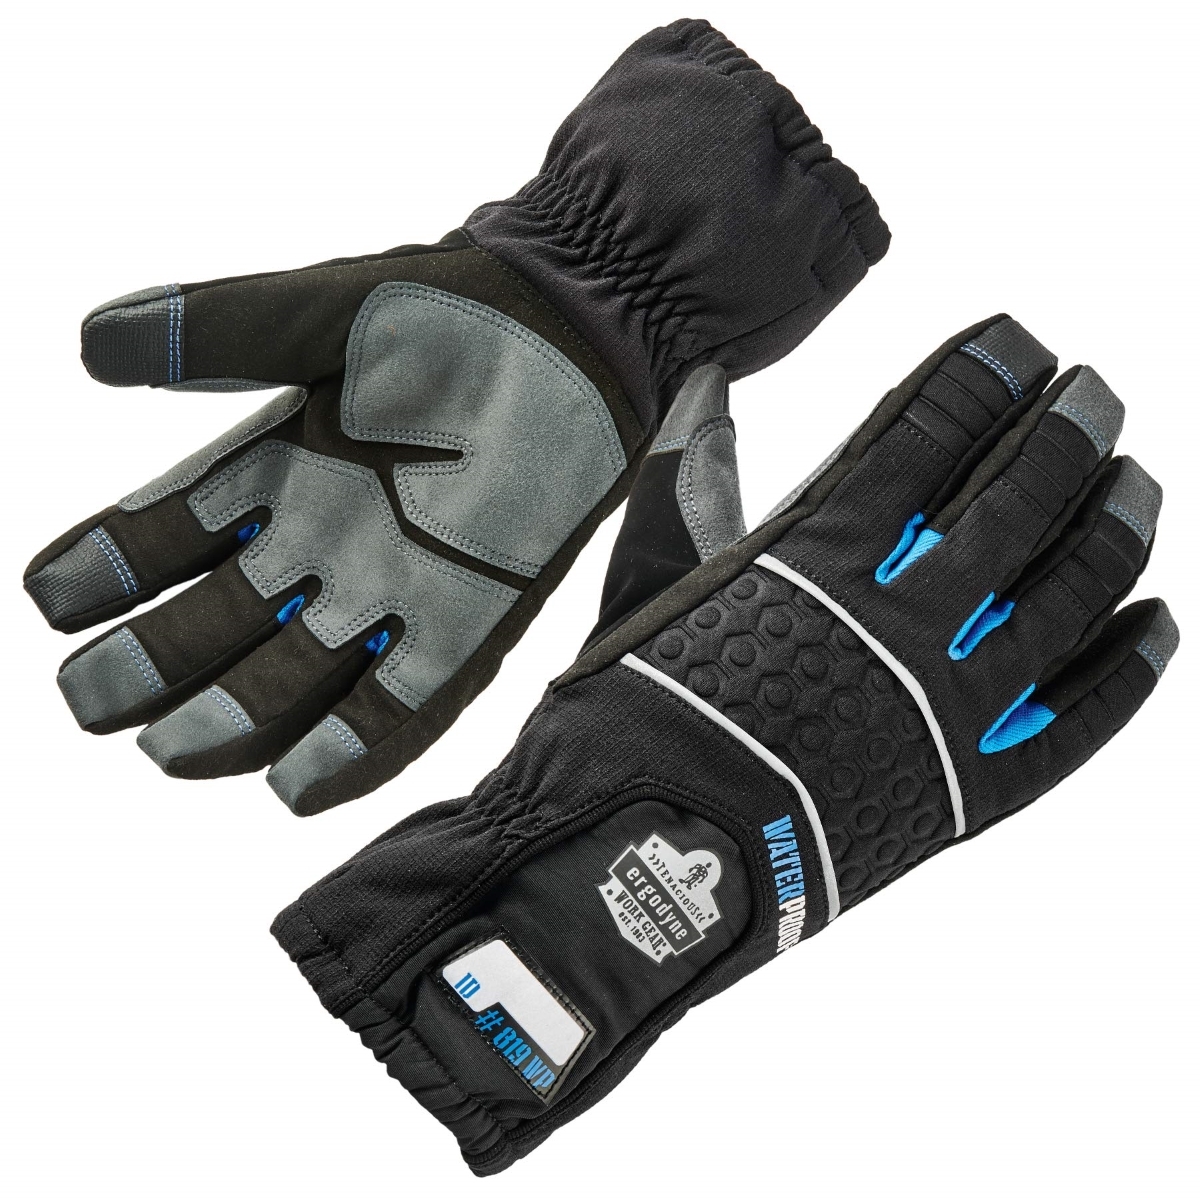 Ergodyne 819WP Black Extreme Thermal Waterproof Gloves